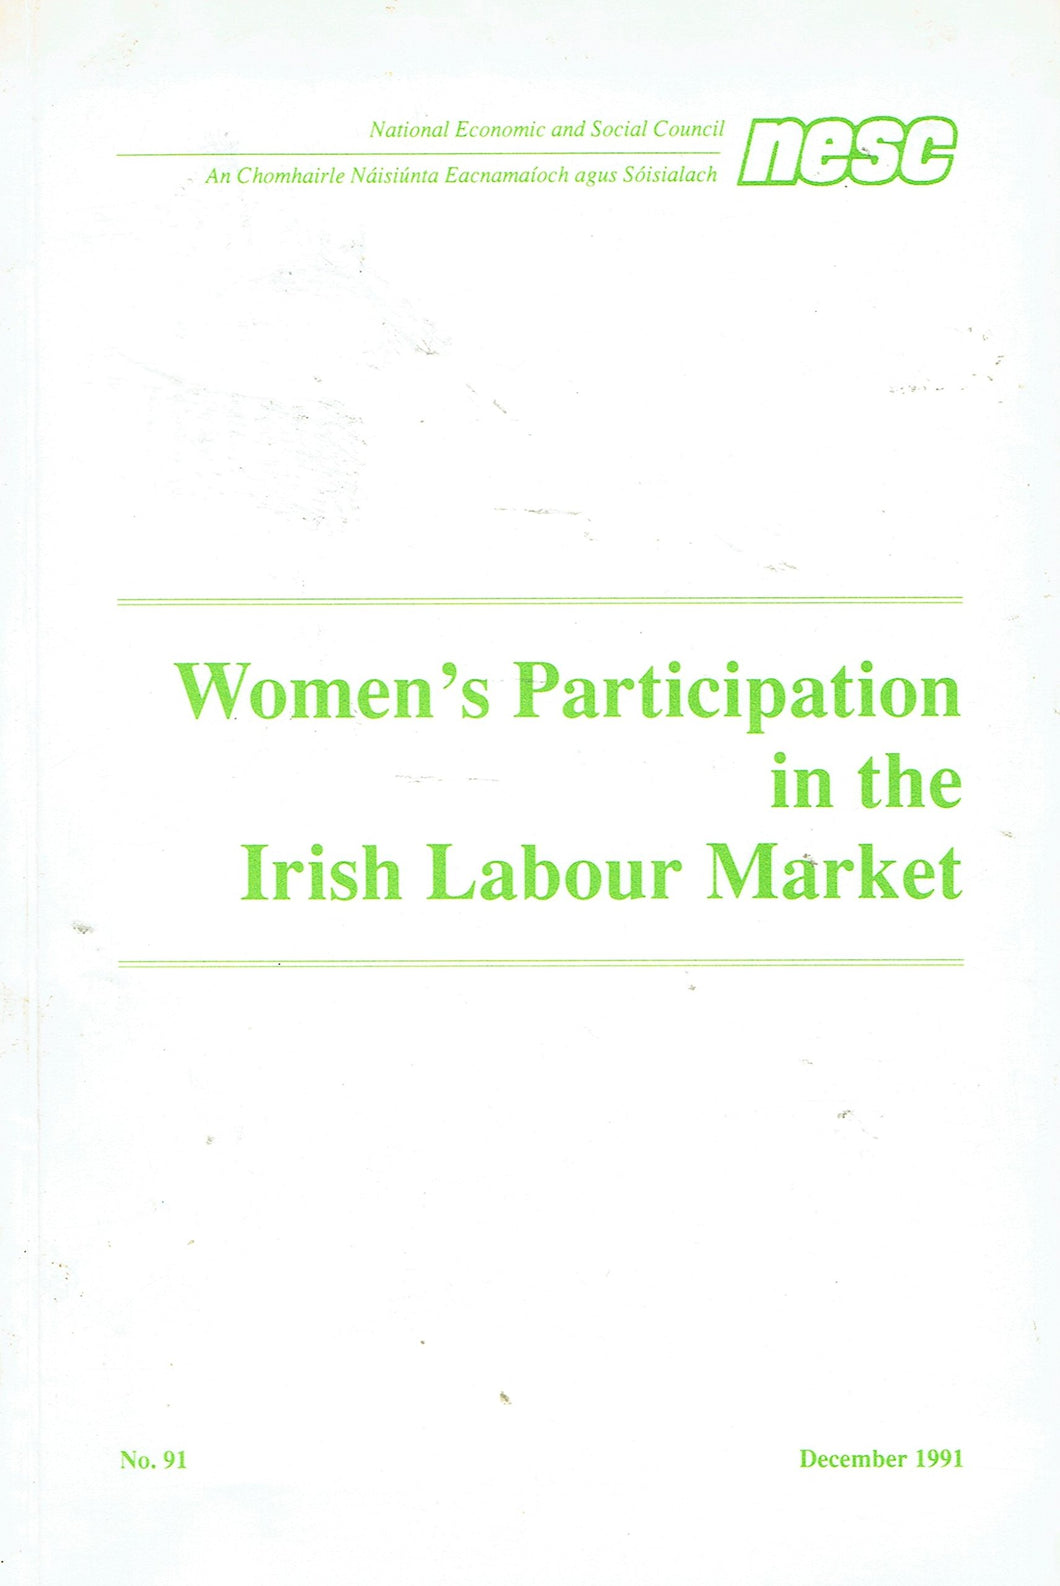 Women's Participation in the Irish Labour Market (NESC)